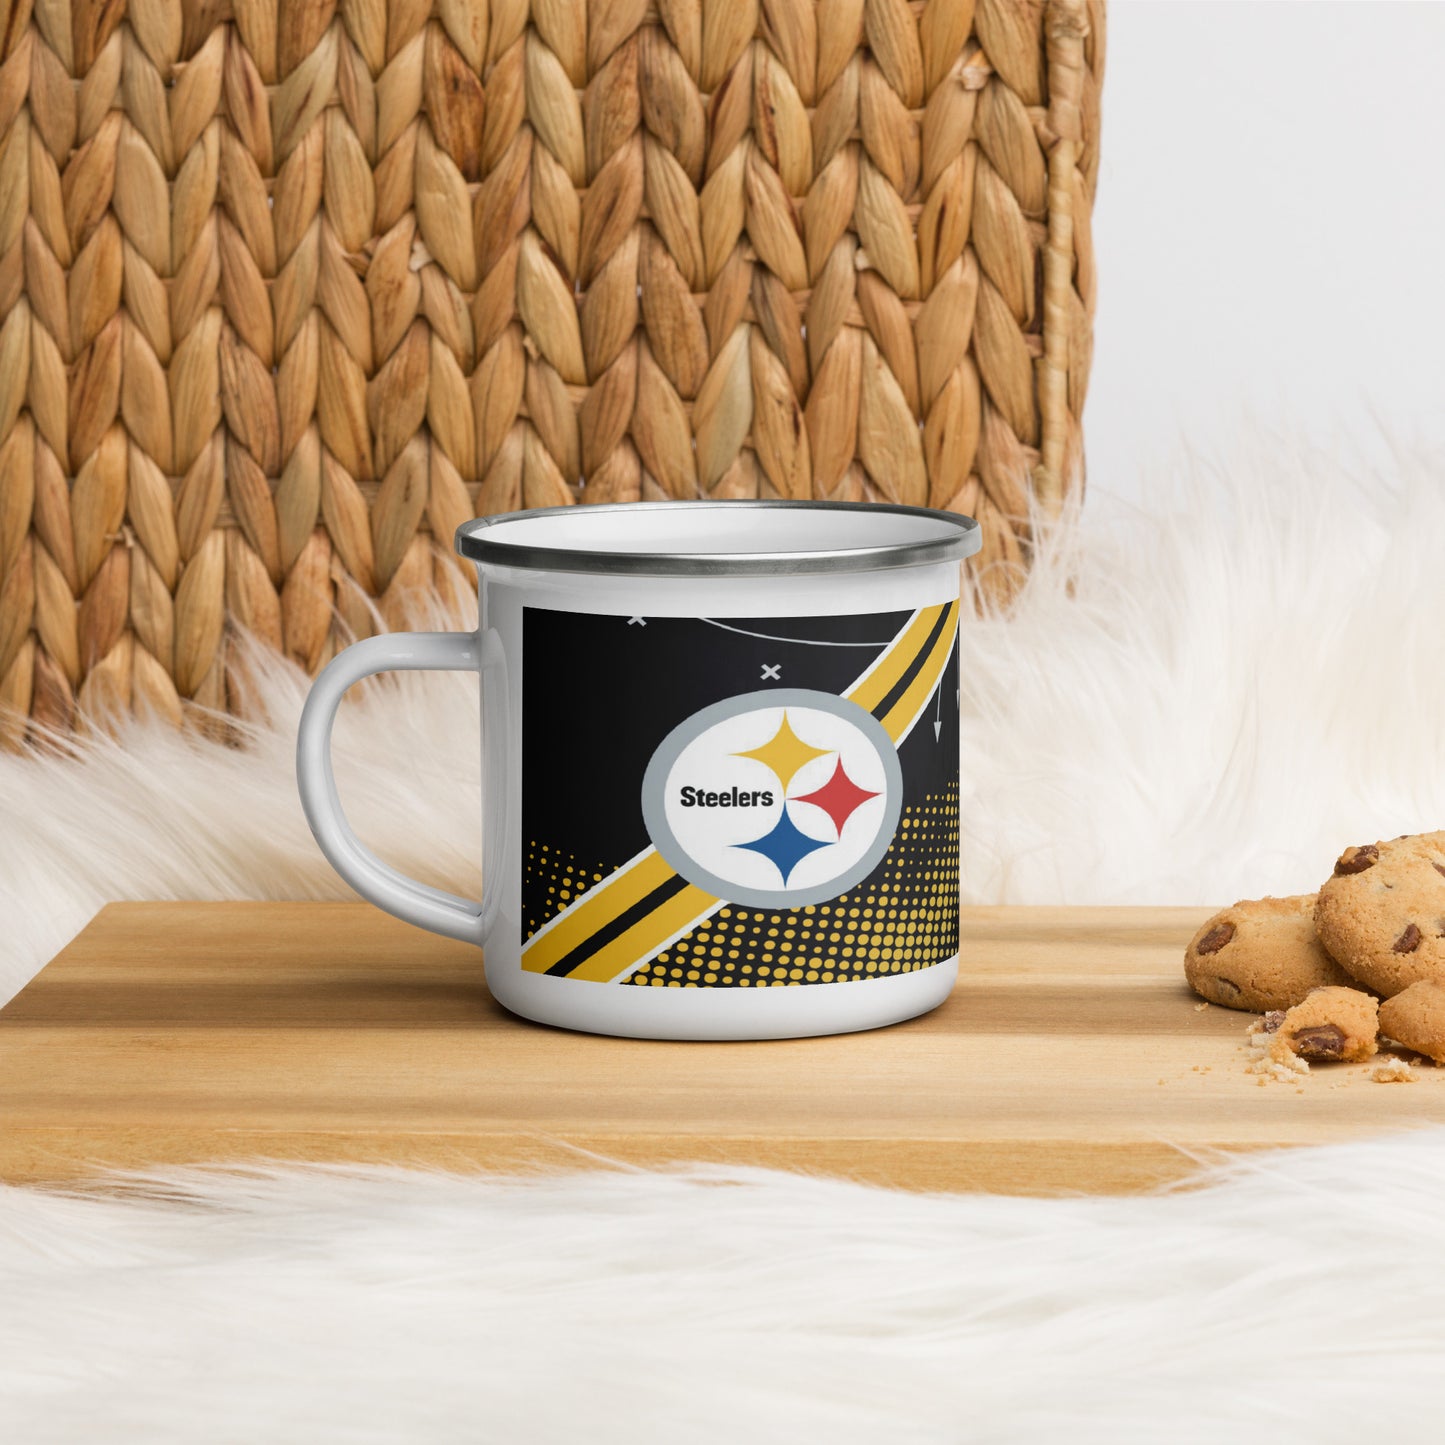 NFL Steelers Mug